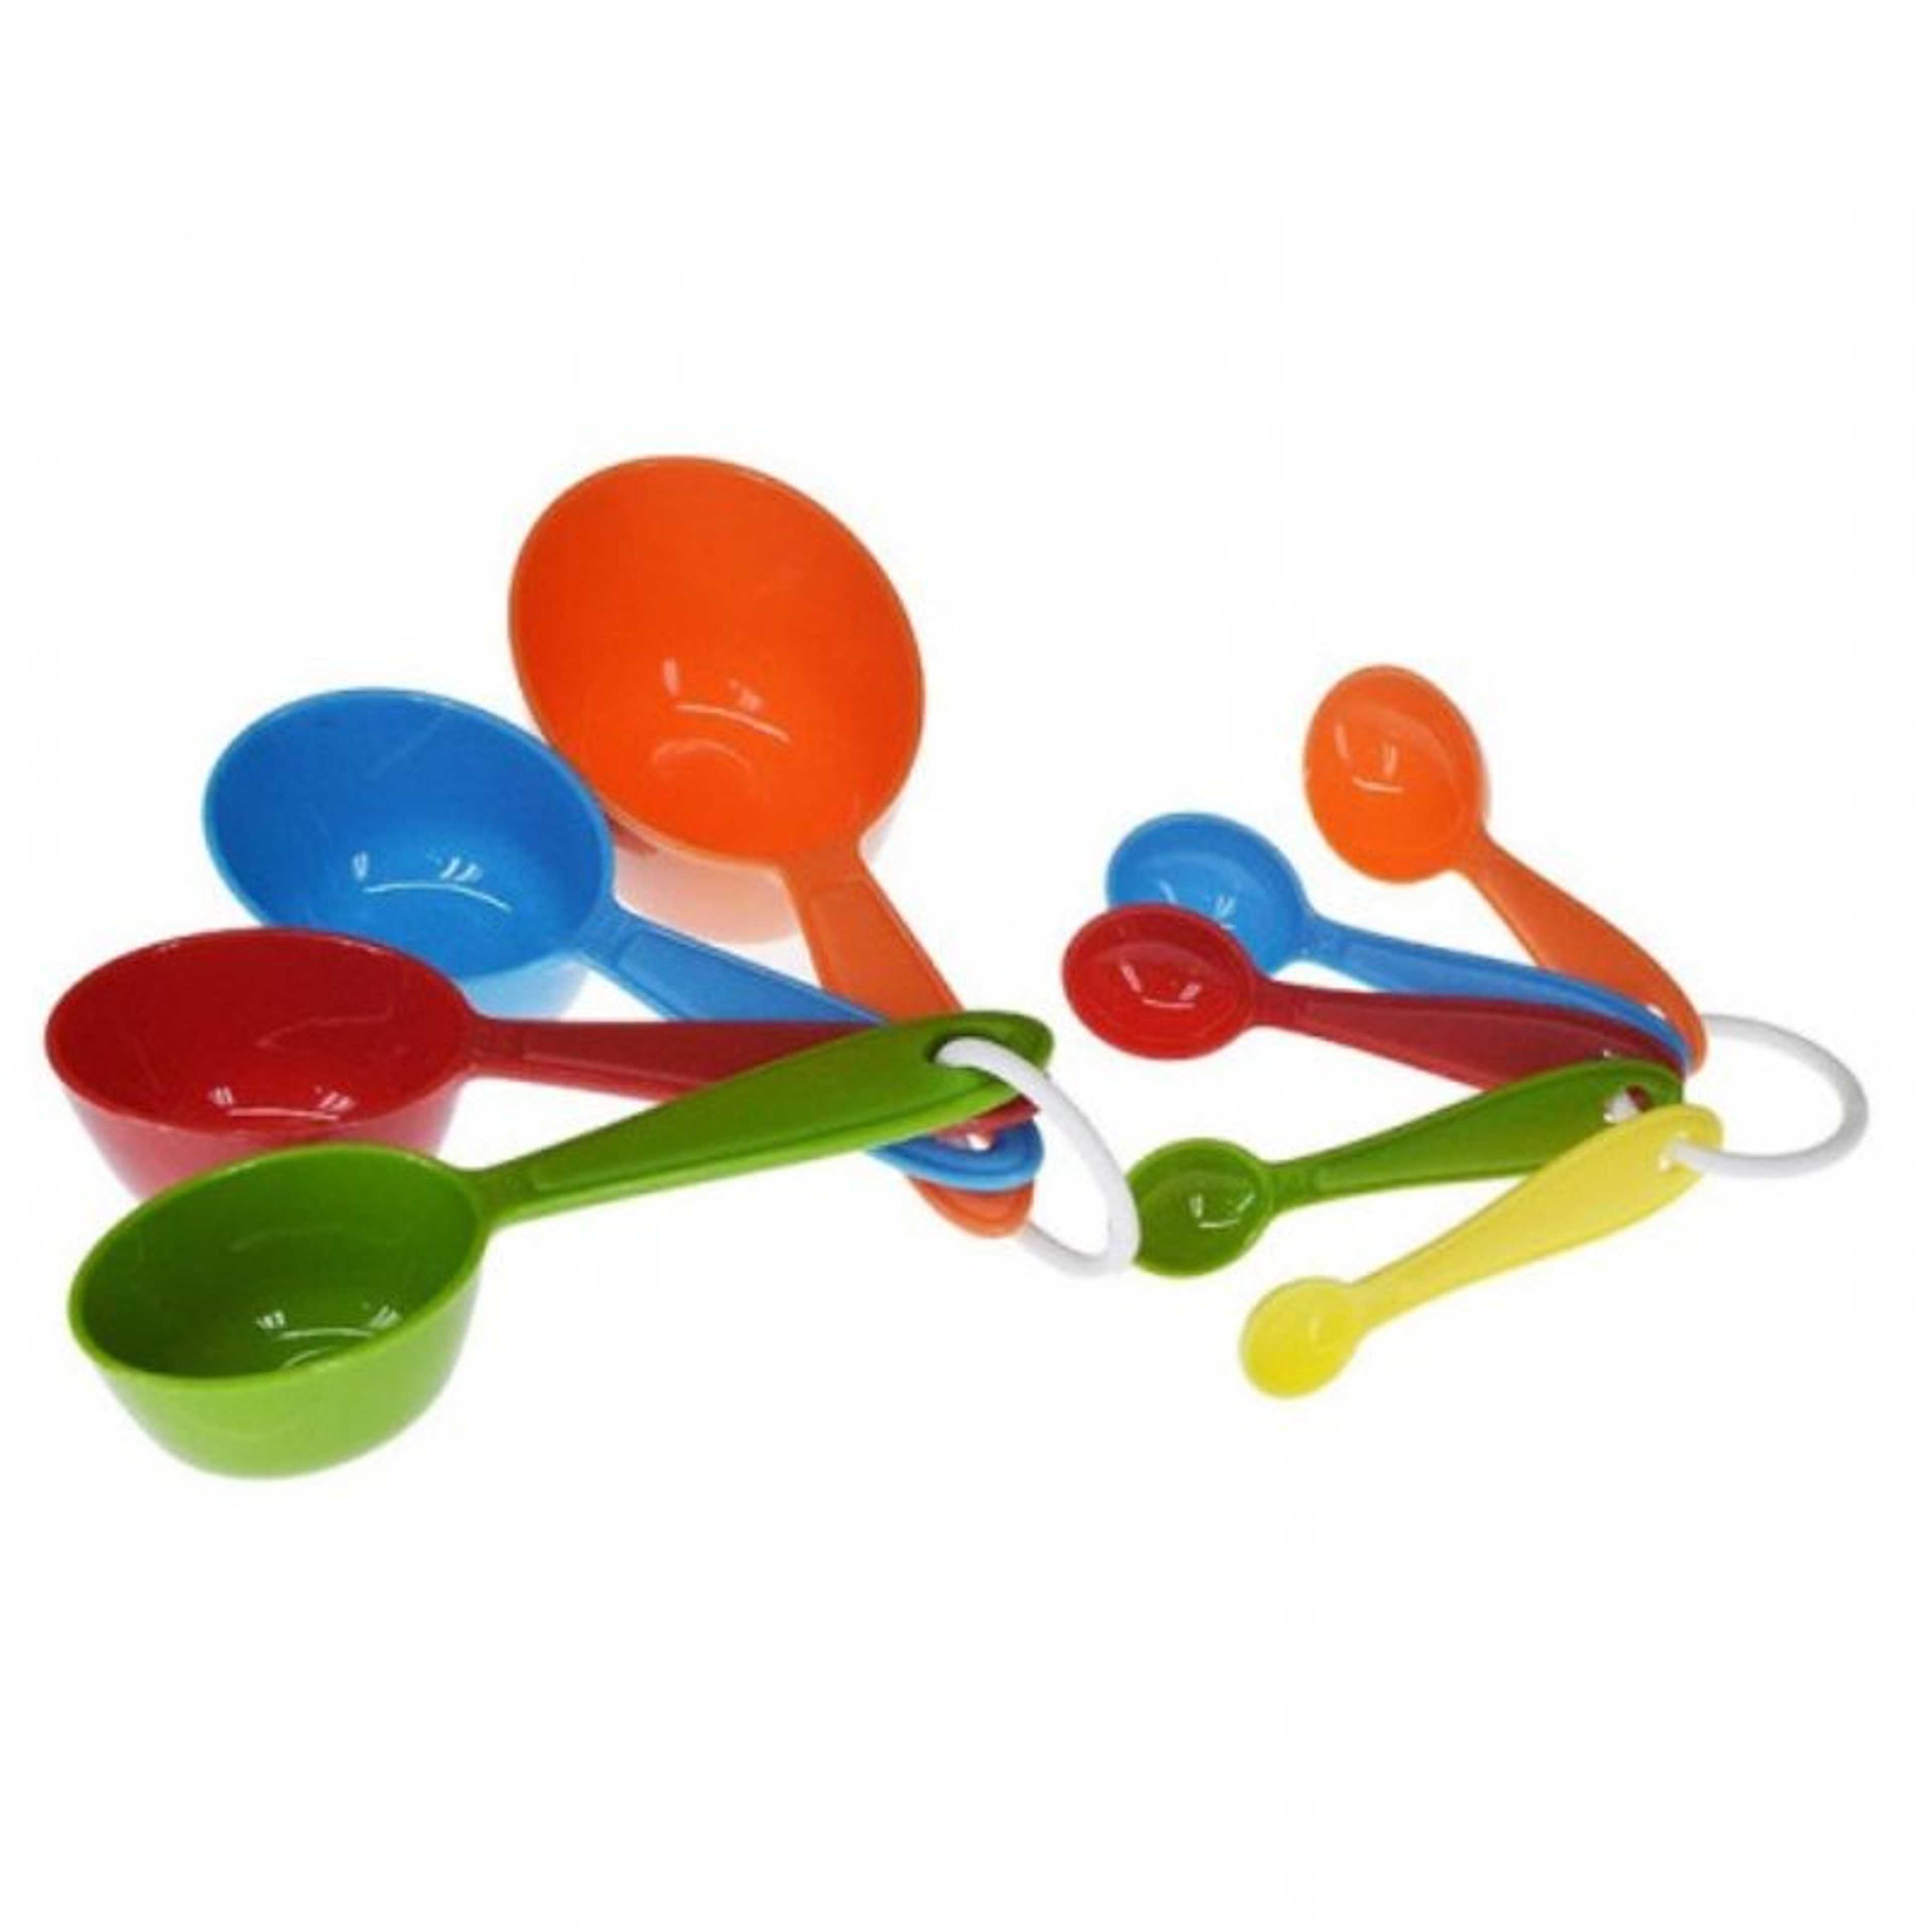 Set of 9 - Plastic Multicolor Kitchen Baking Measuring Spoons & Cups - Random Color